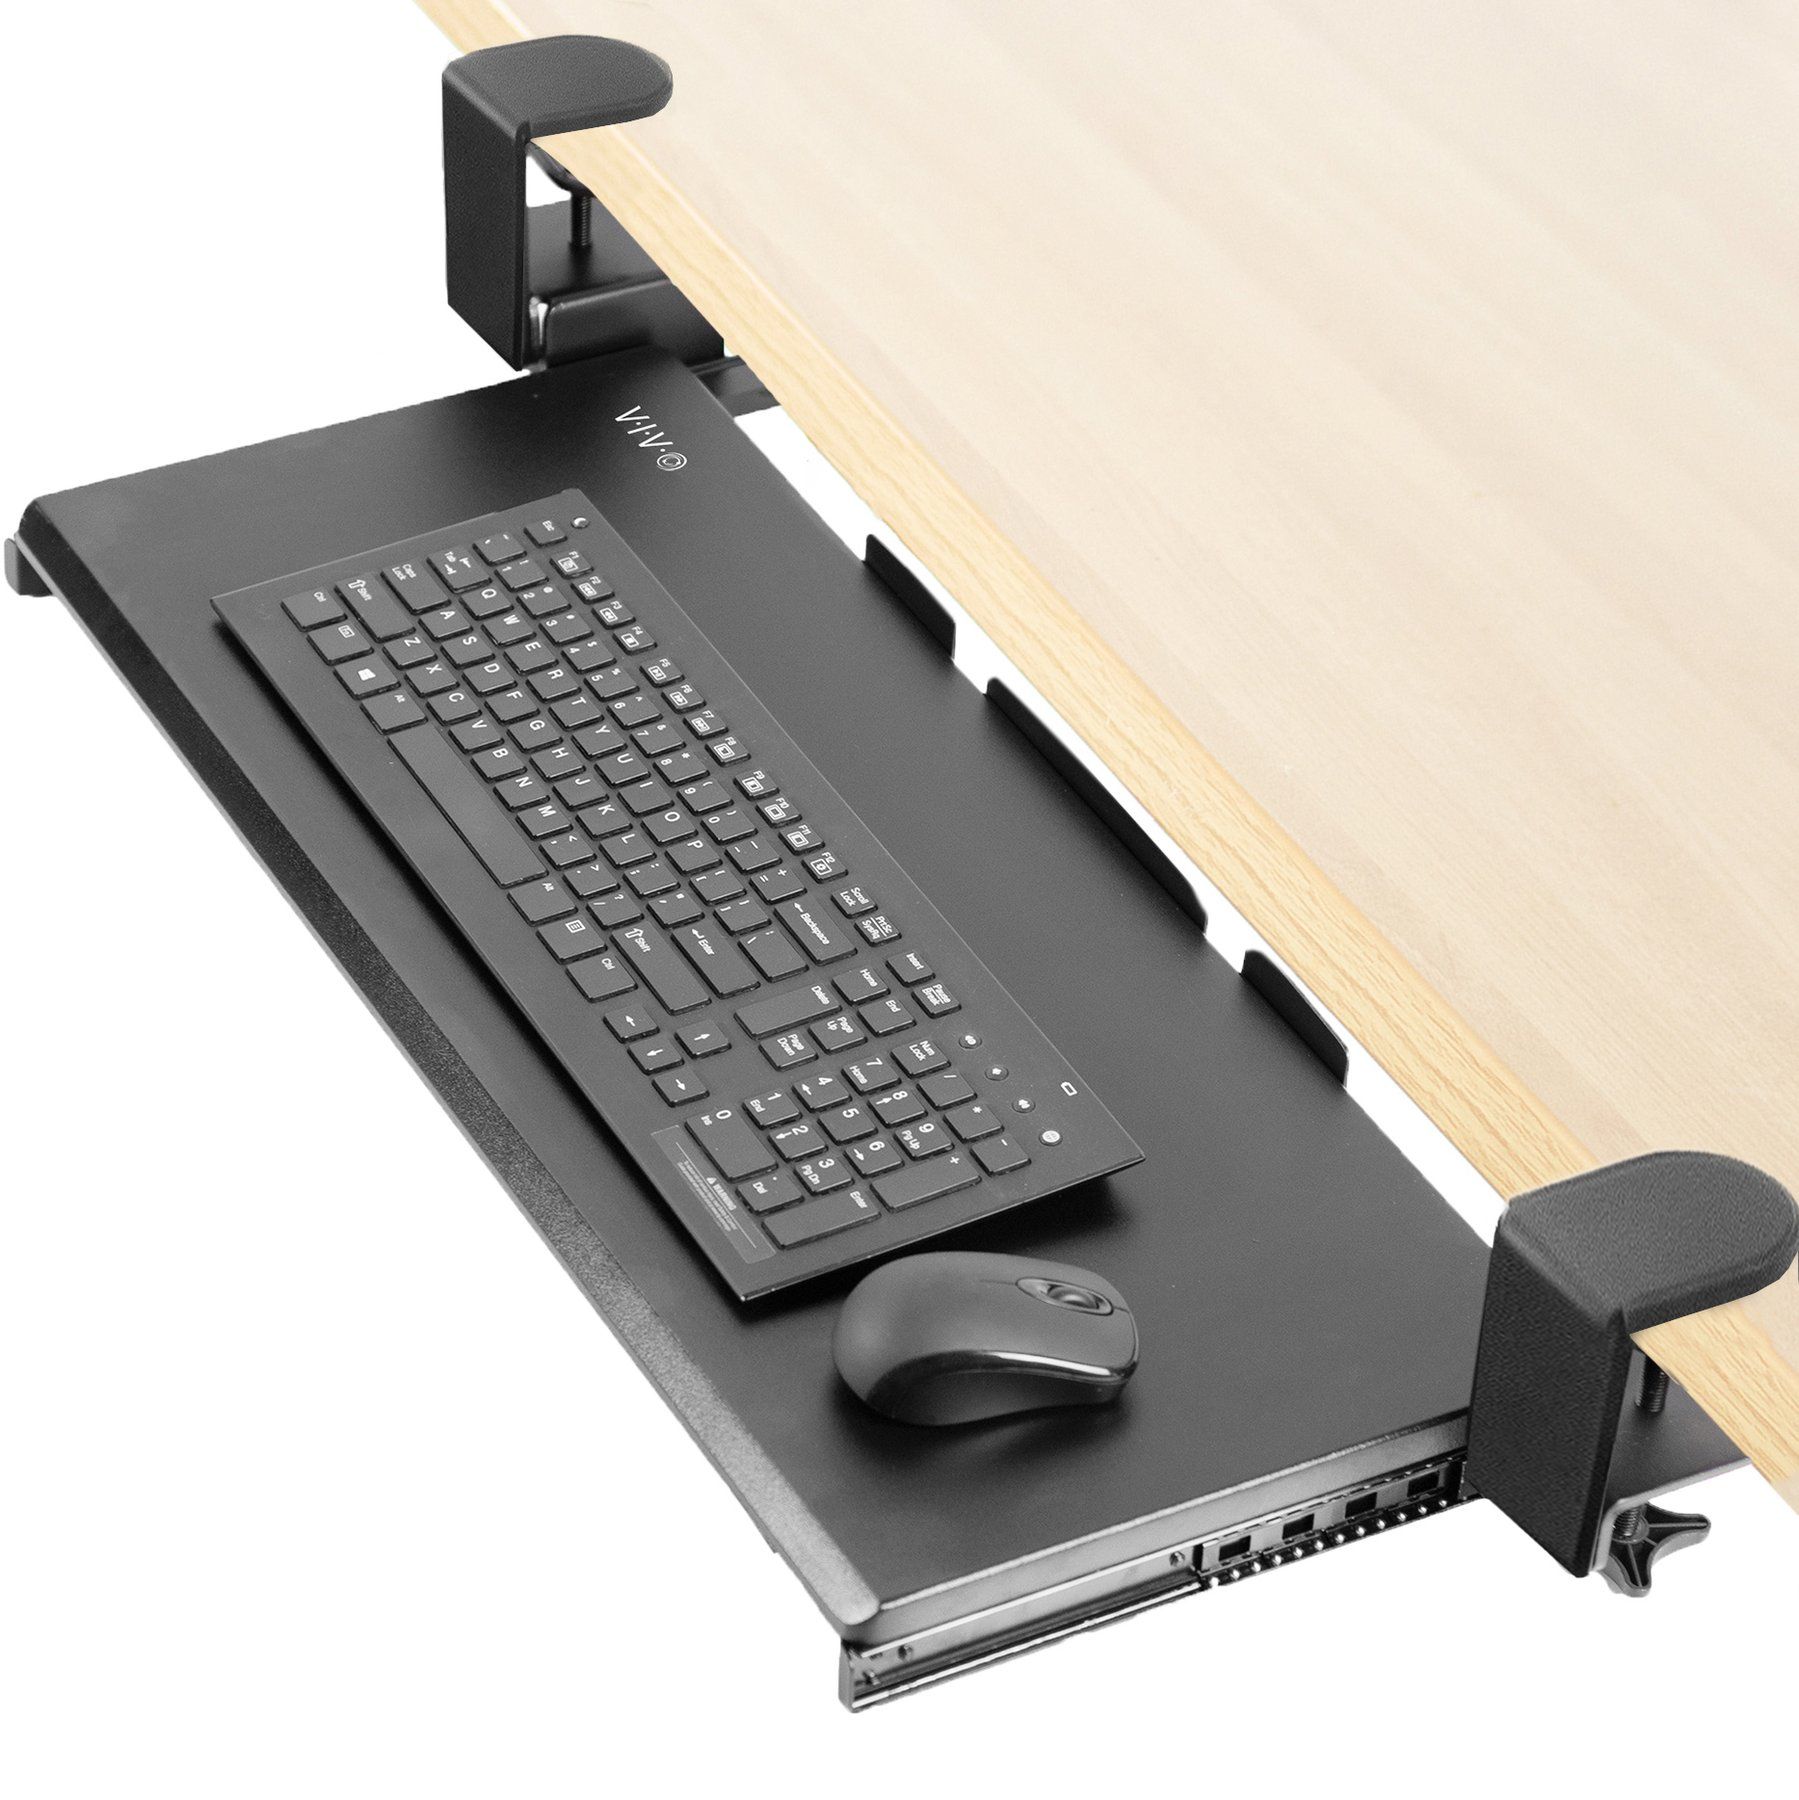 VIVO Clamp-on Keyboard Tray